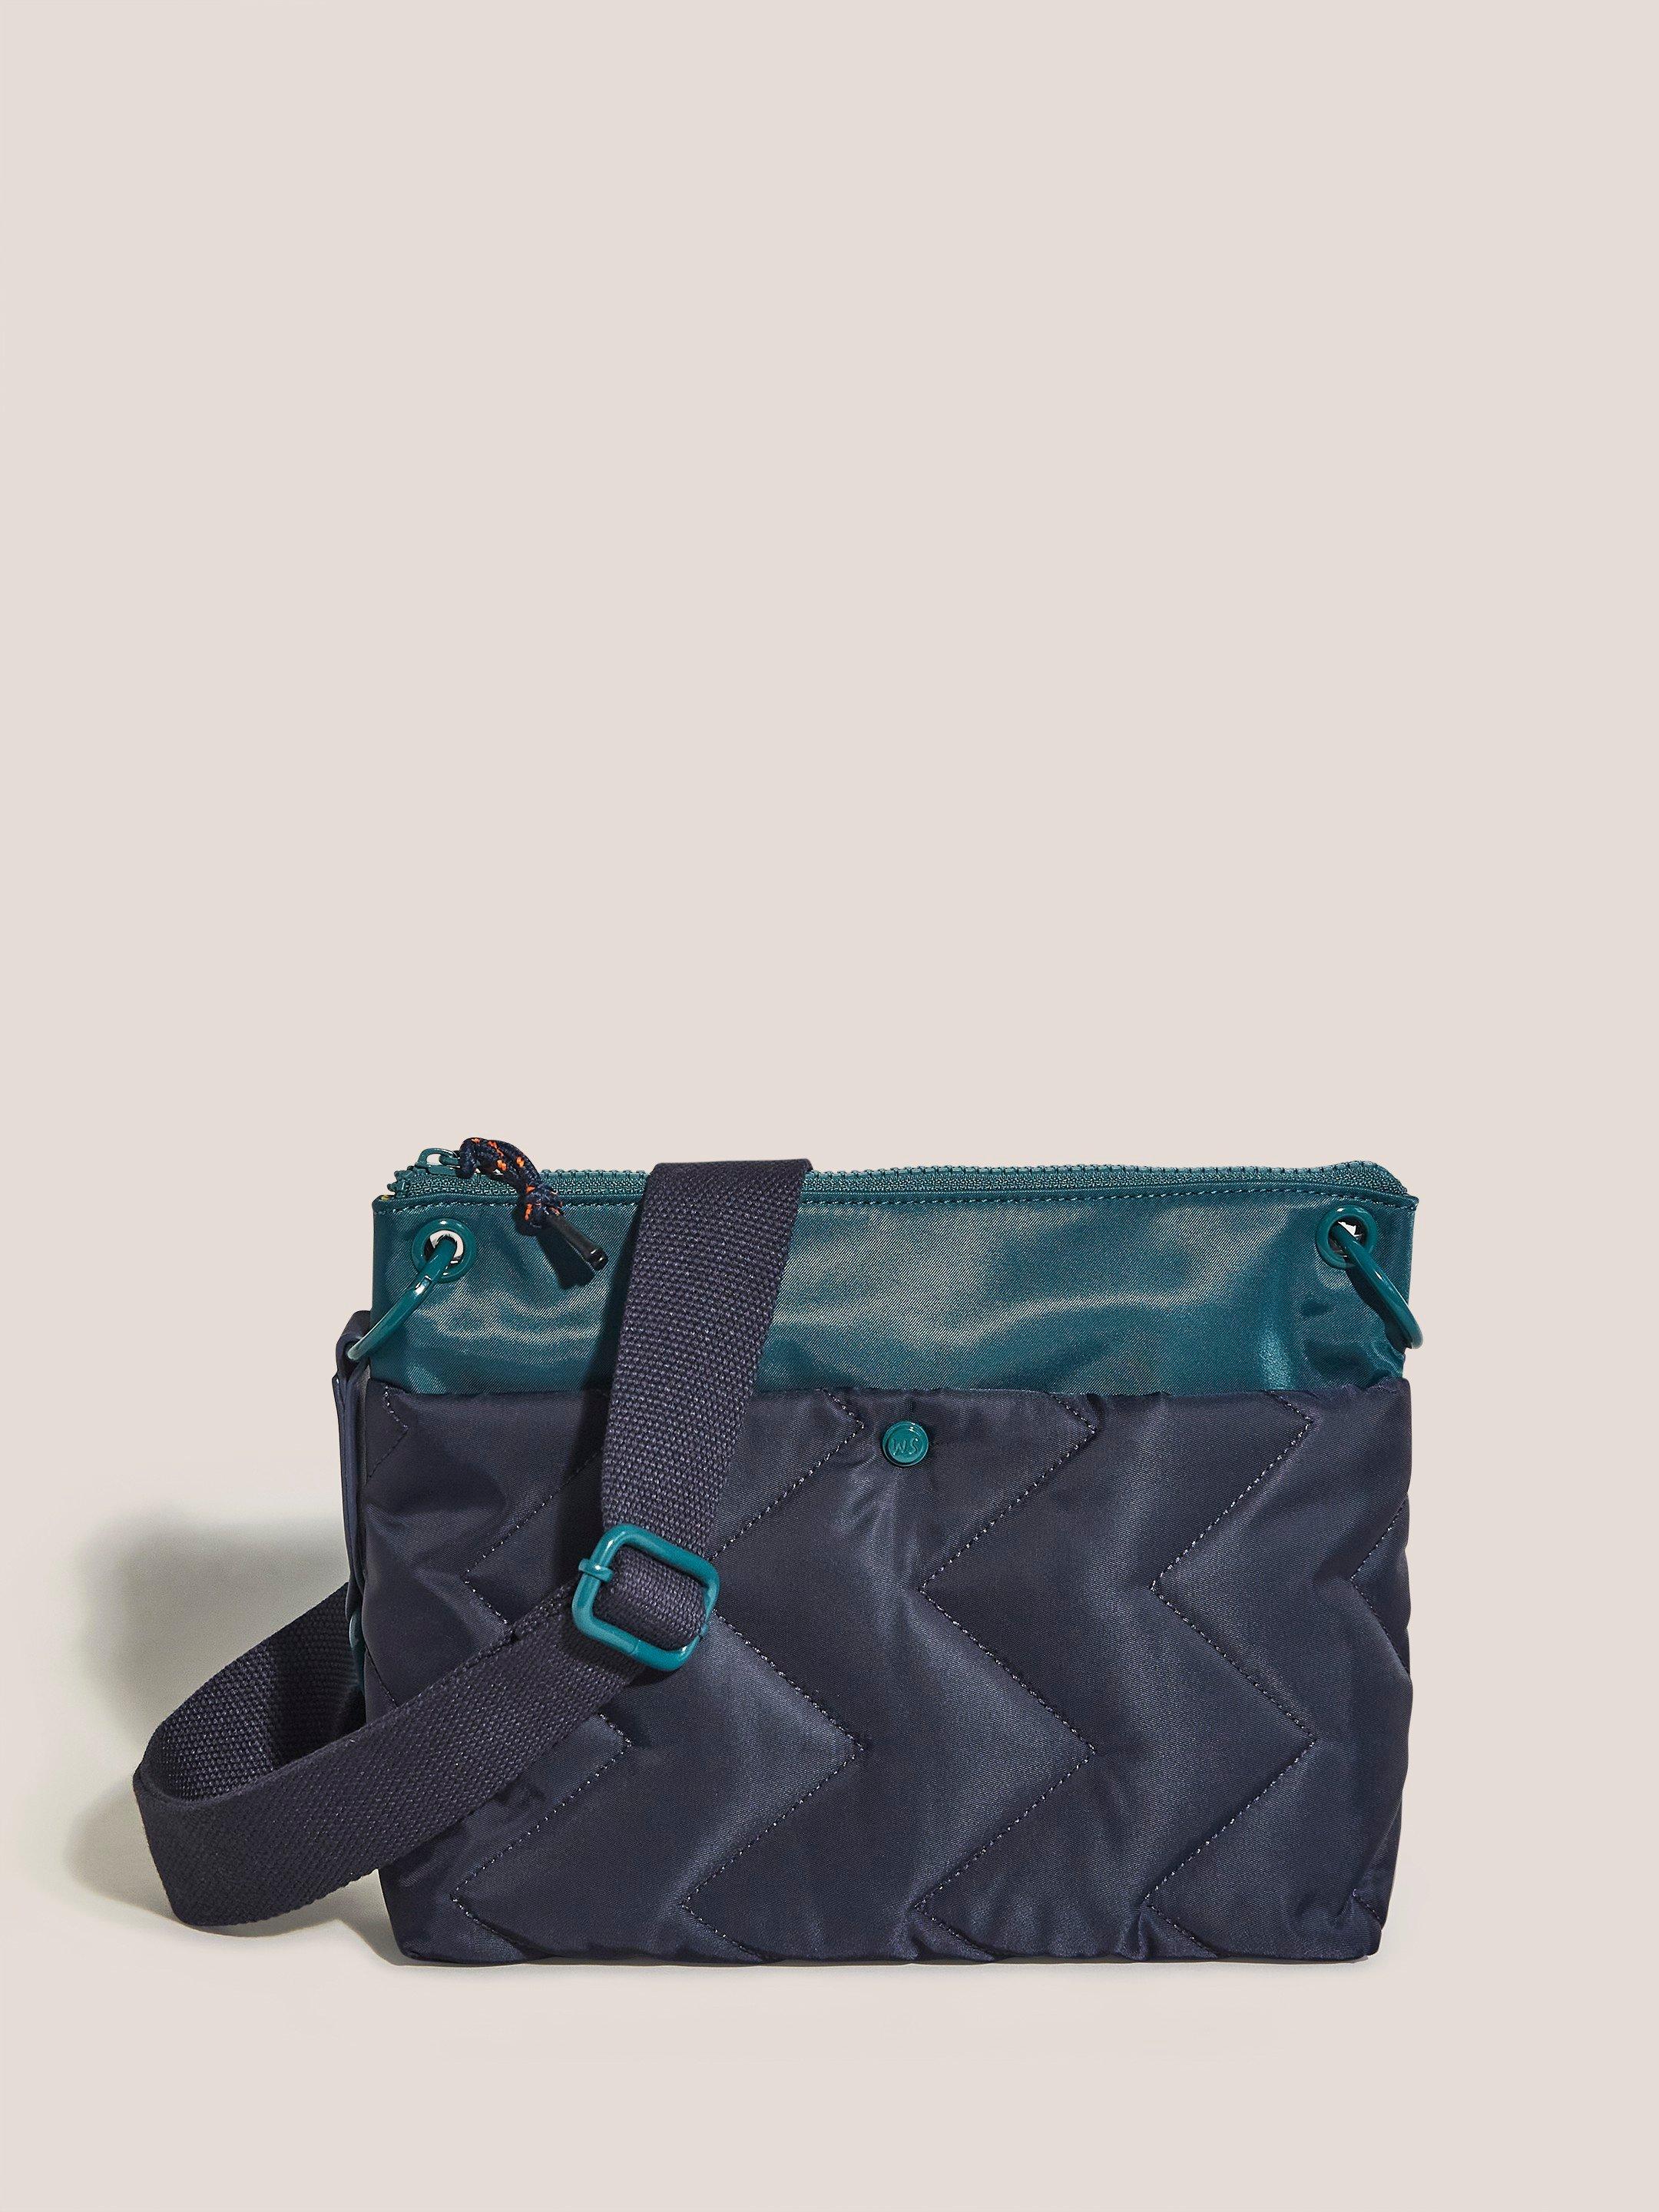 Wanda Nylon Crossbody Bag in NAVY MULTI - MODEL FRONT